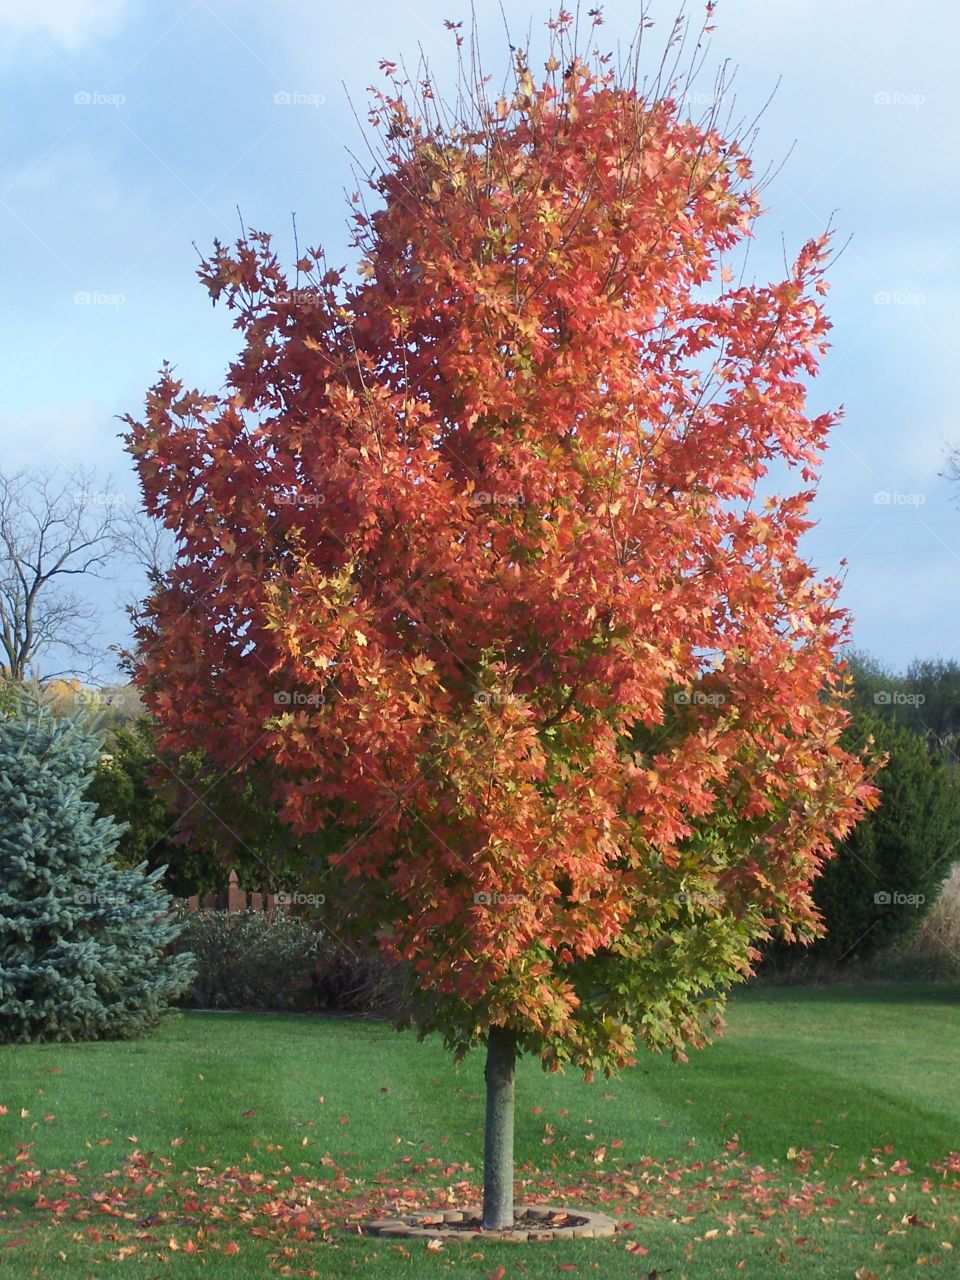 Maple tree leaves turning orange in the autumn season.